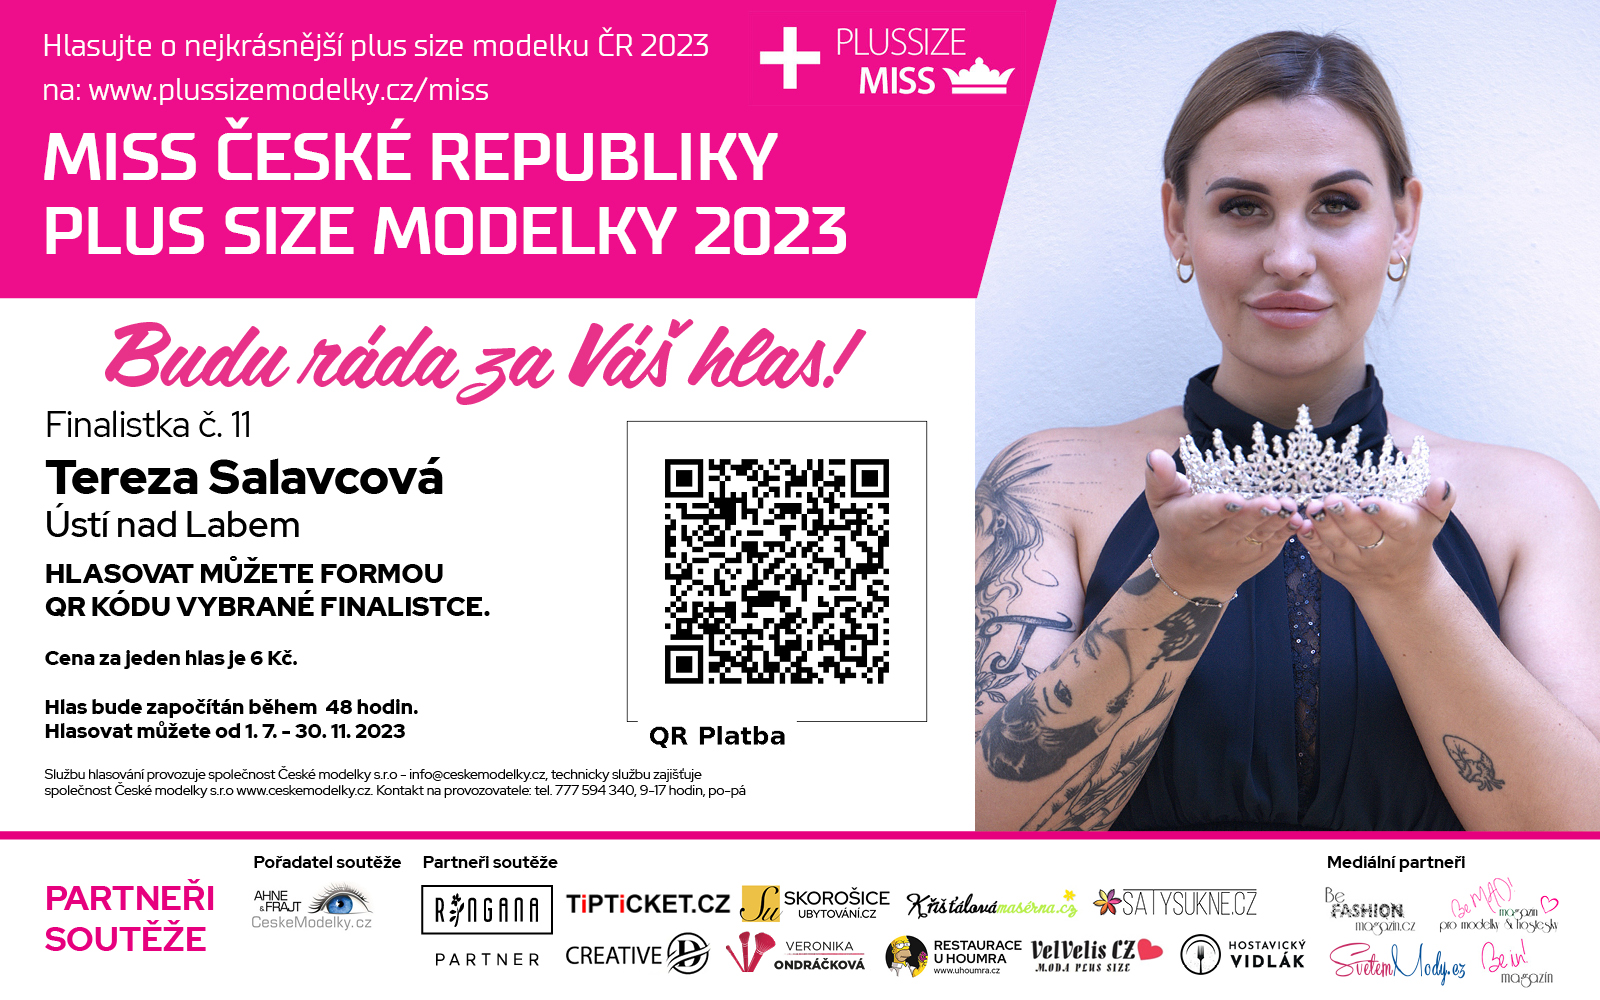 Tereza Salavcov finalistka .11 soute Miss Plus size modelky R 2023